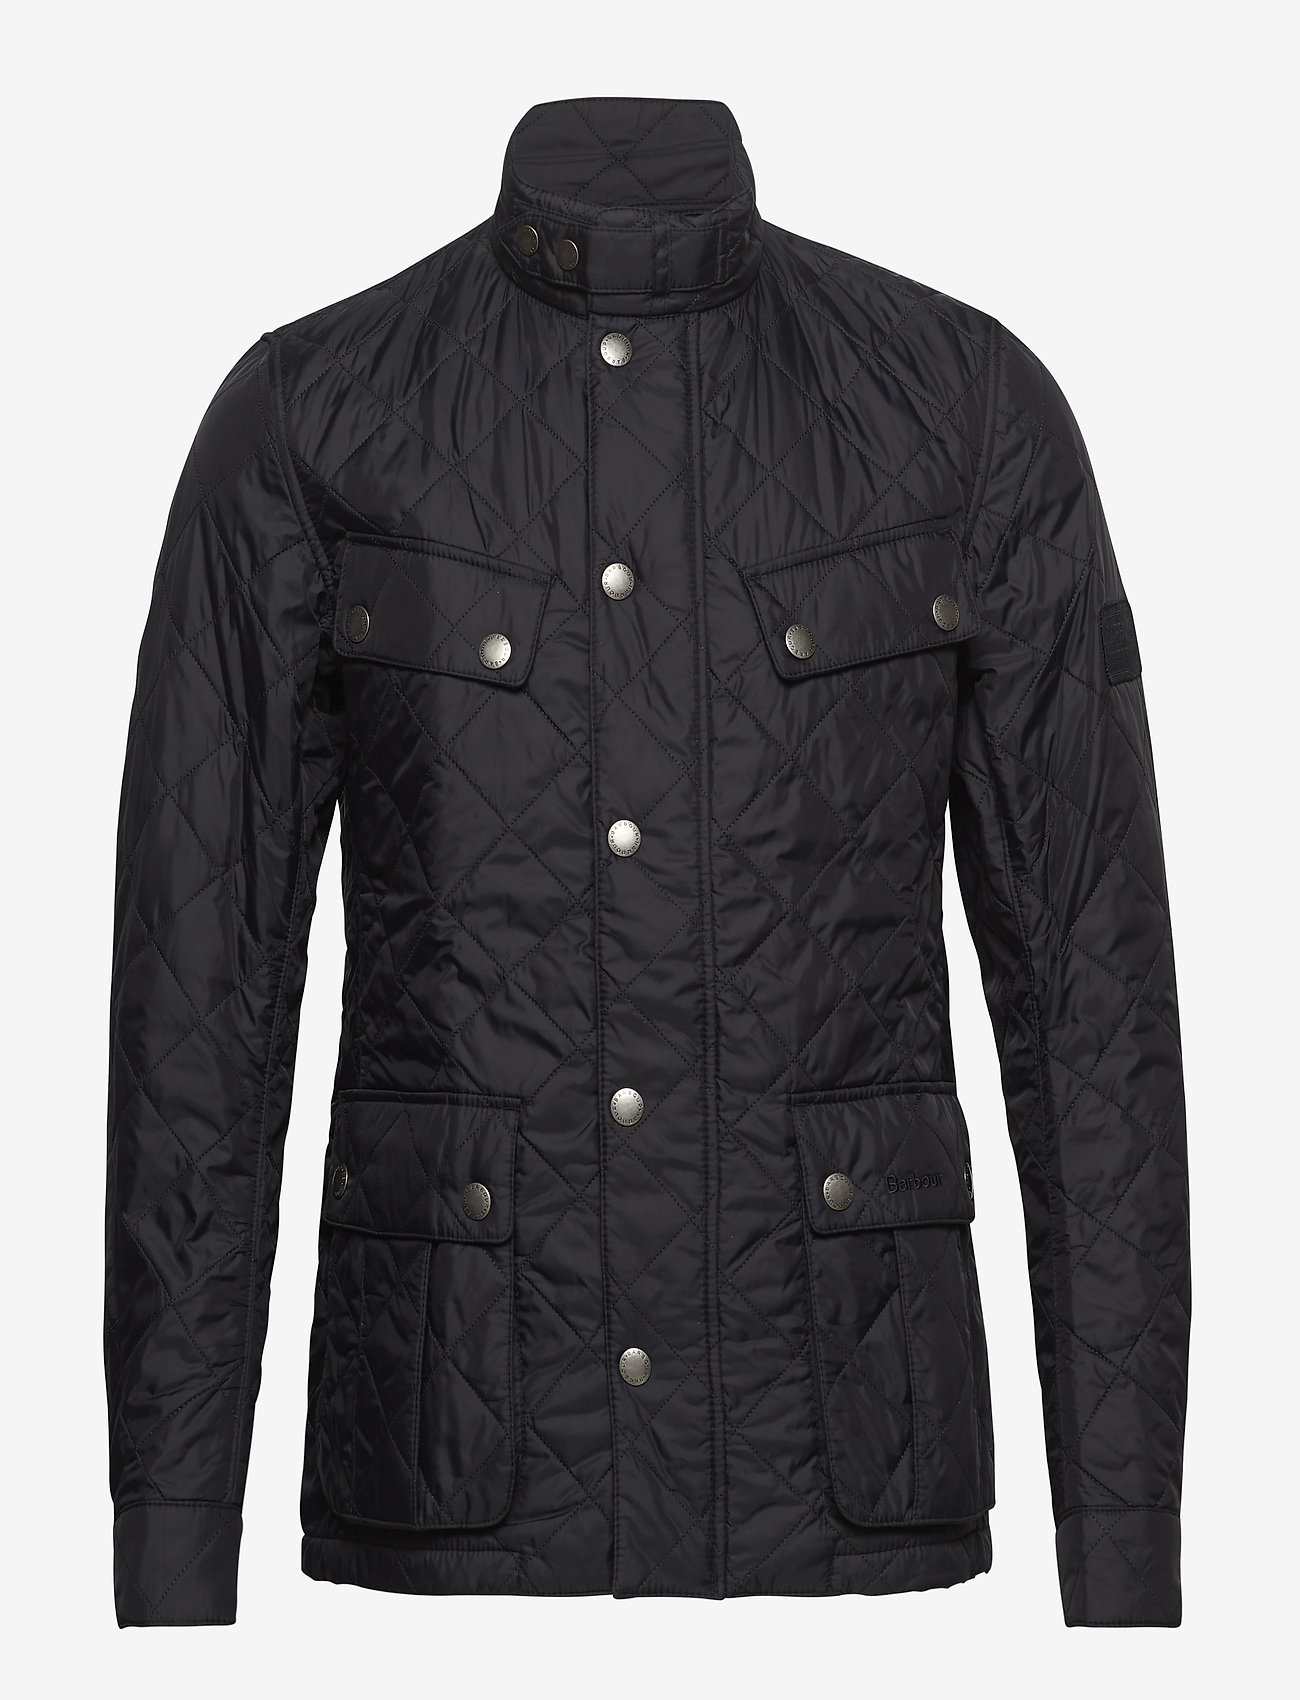 Barbour - Ariel Quilt - quilted jackets - black - 1